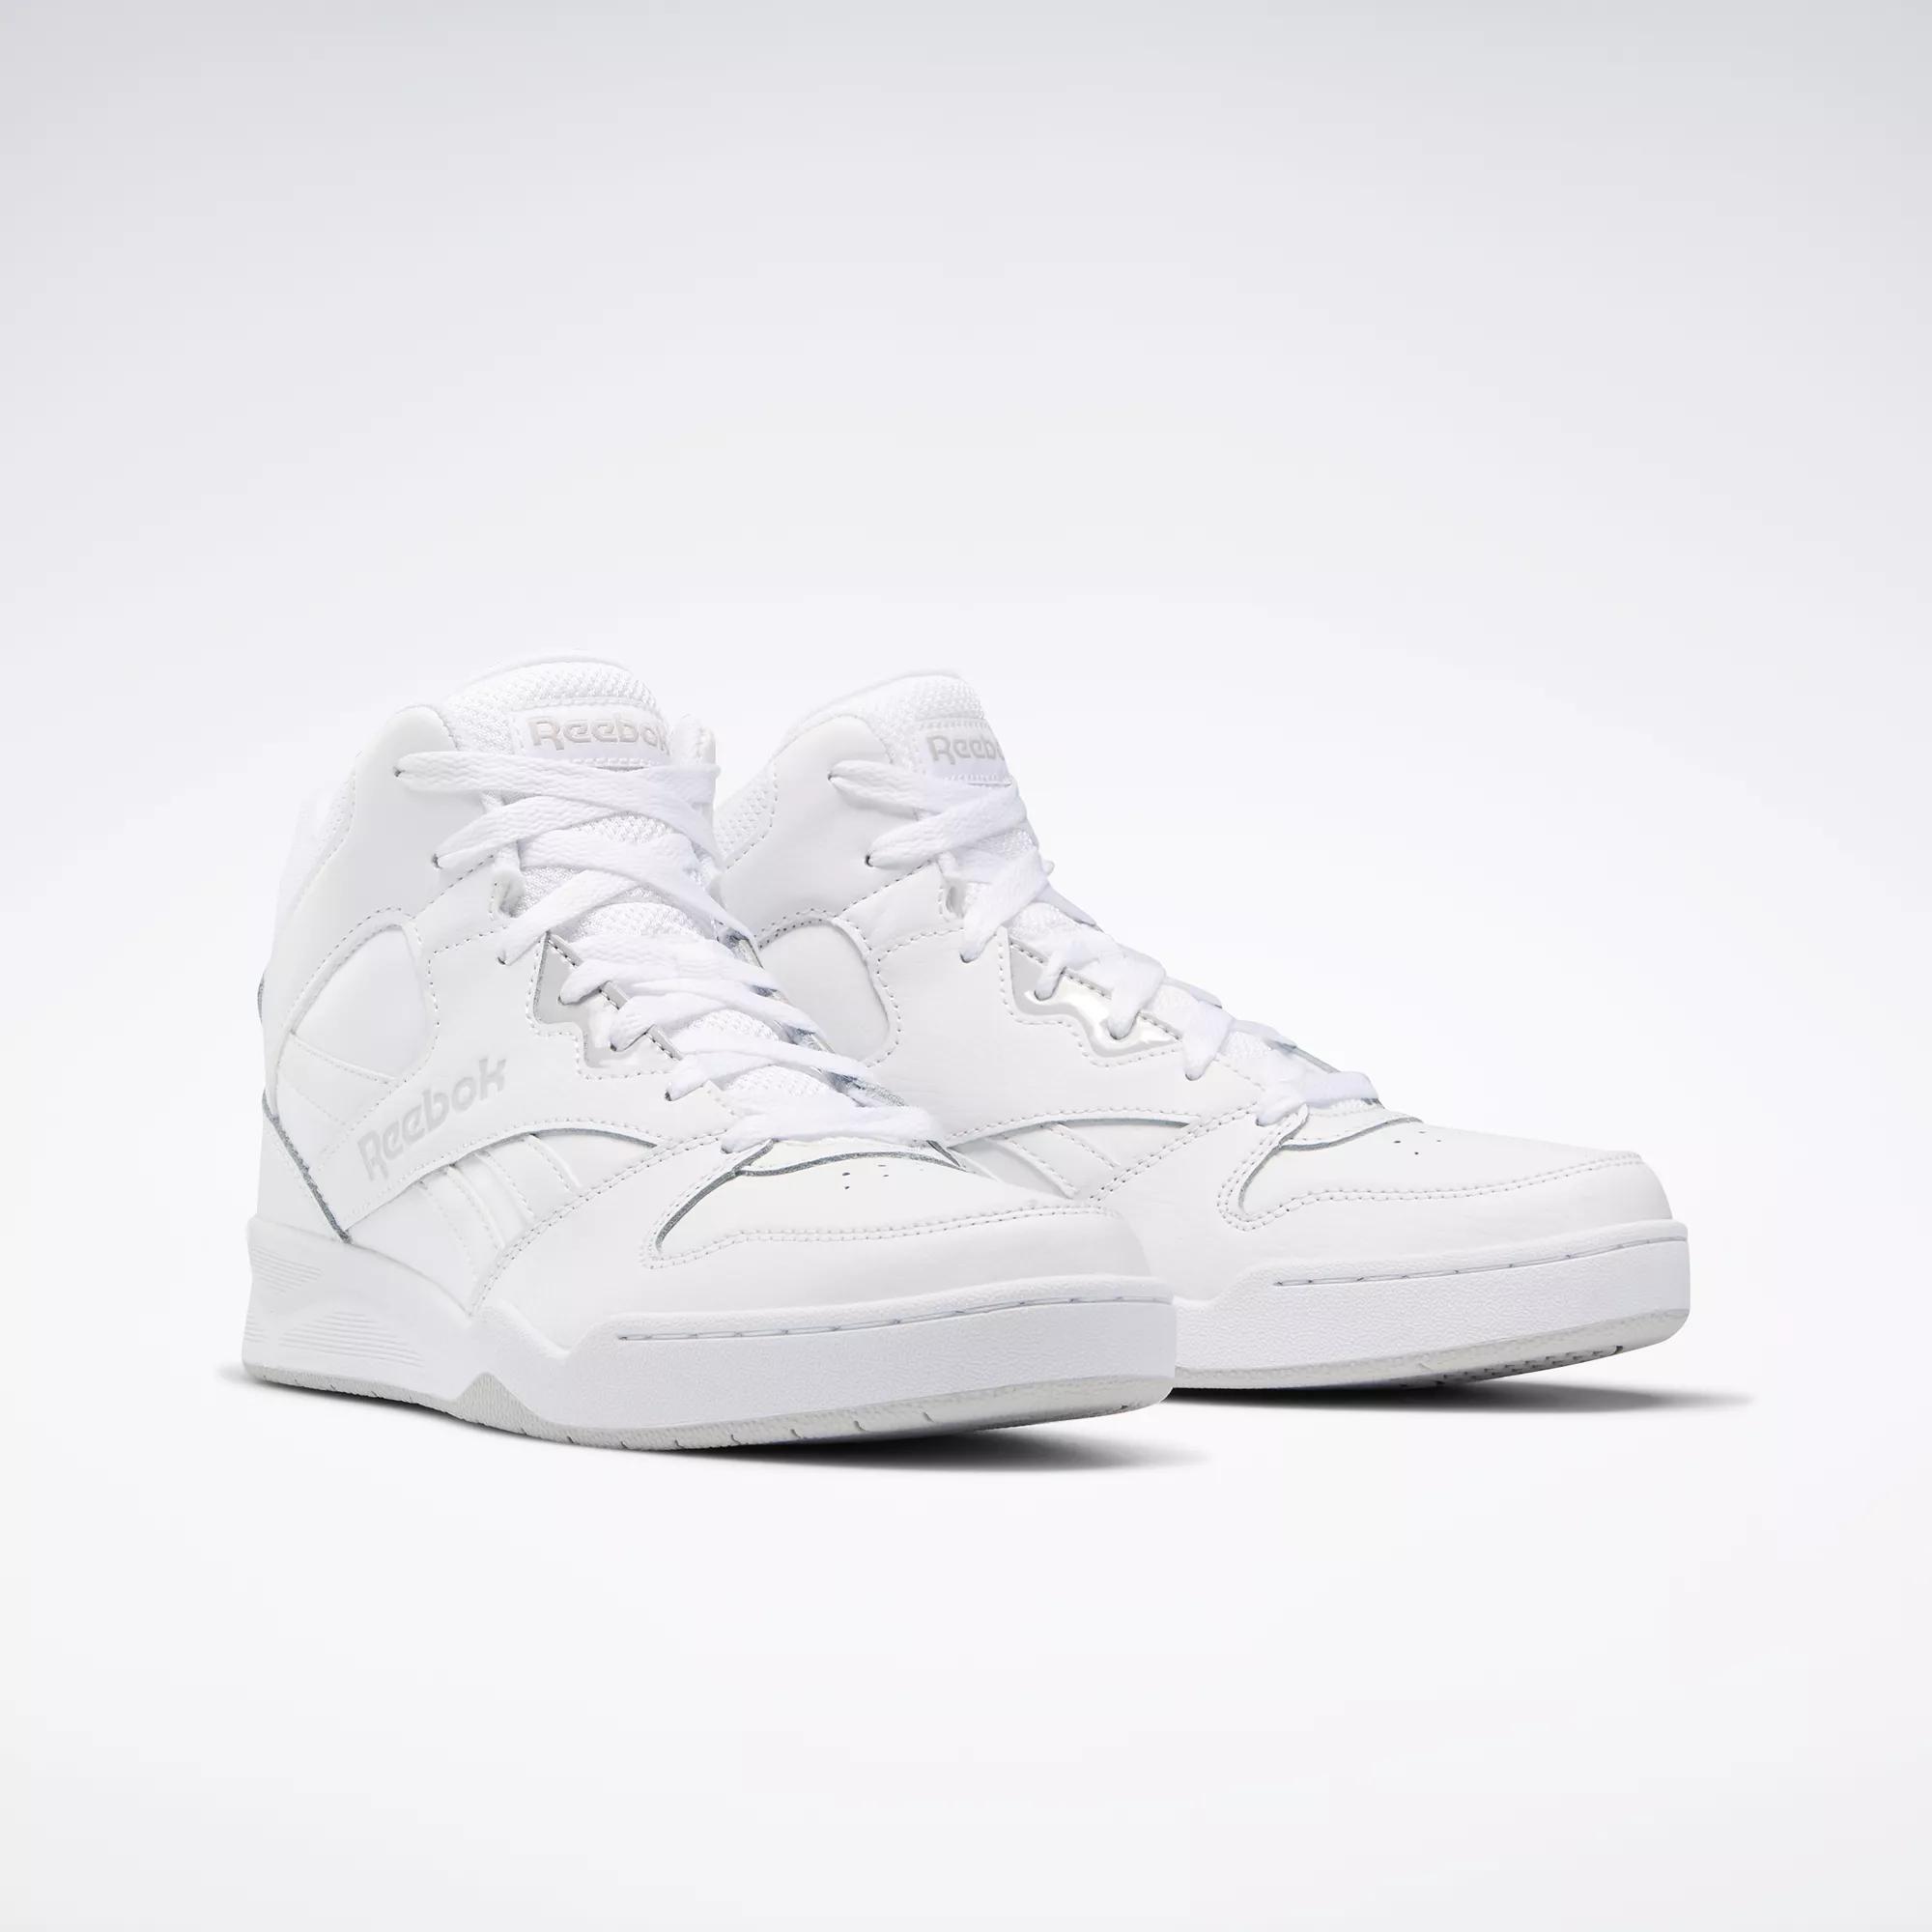 BB4500 Hi 2.0 Shoes - White / Lgh Solid Grey